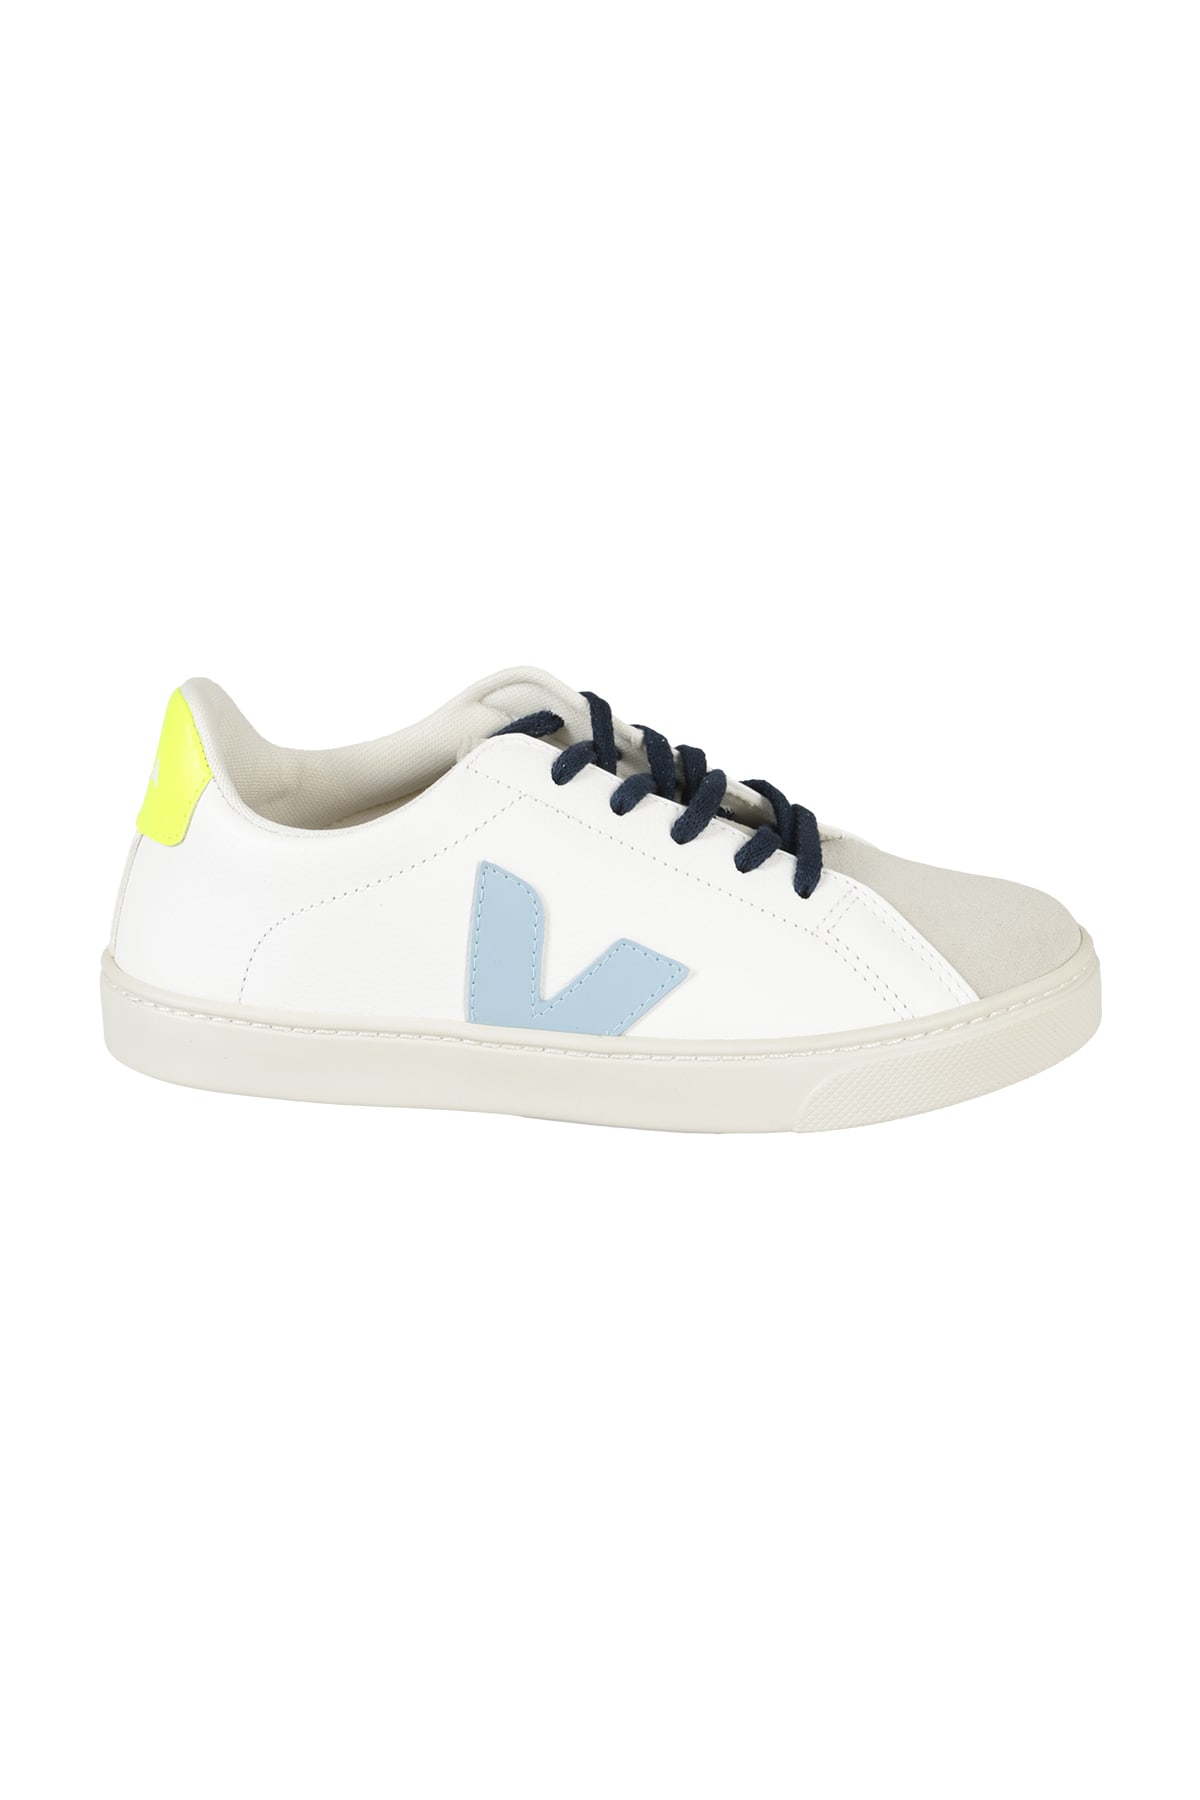 Veja Kids' Shoes In White Jaune